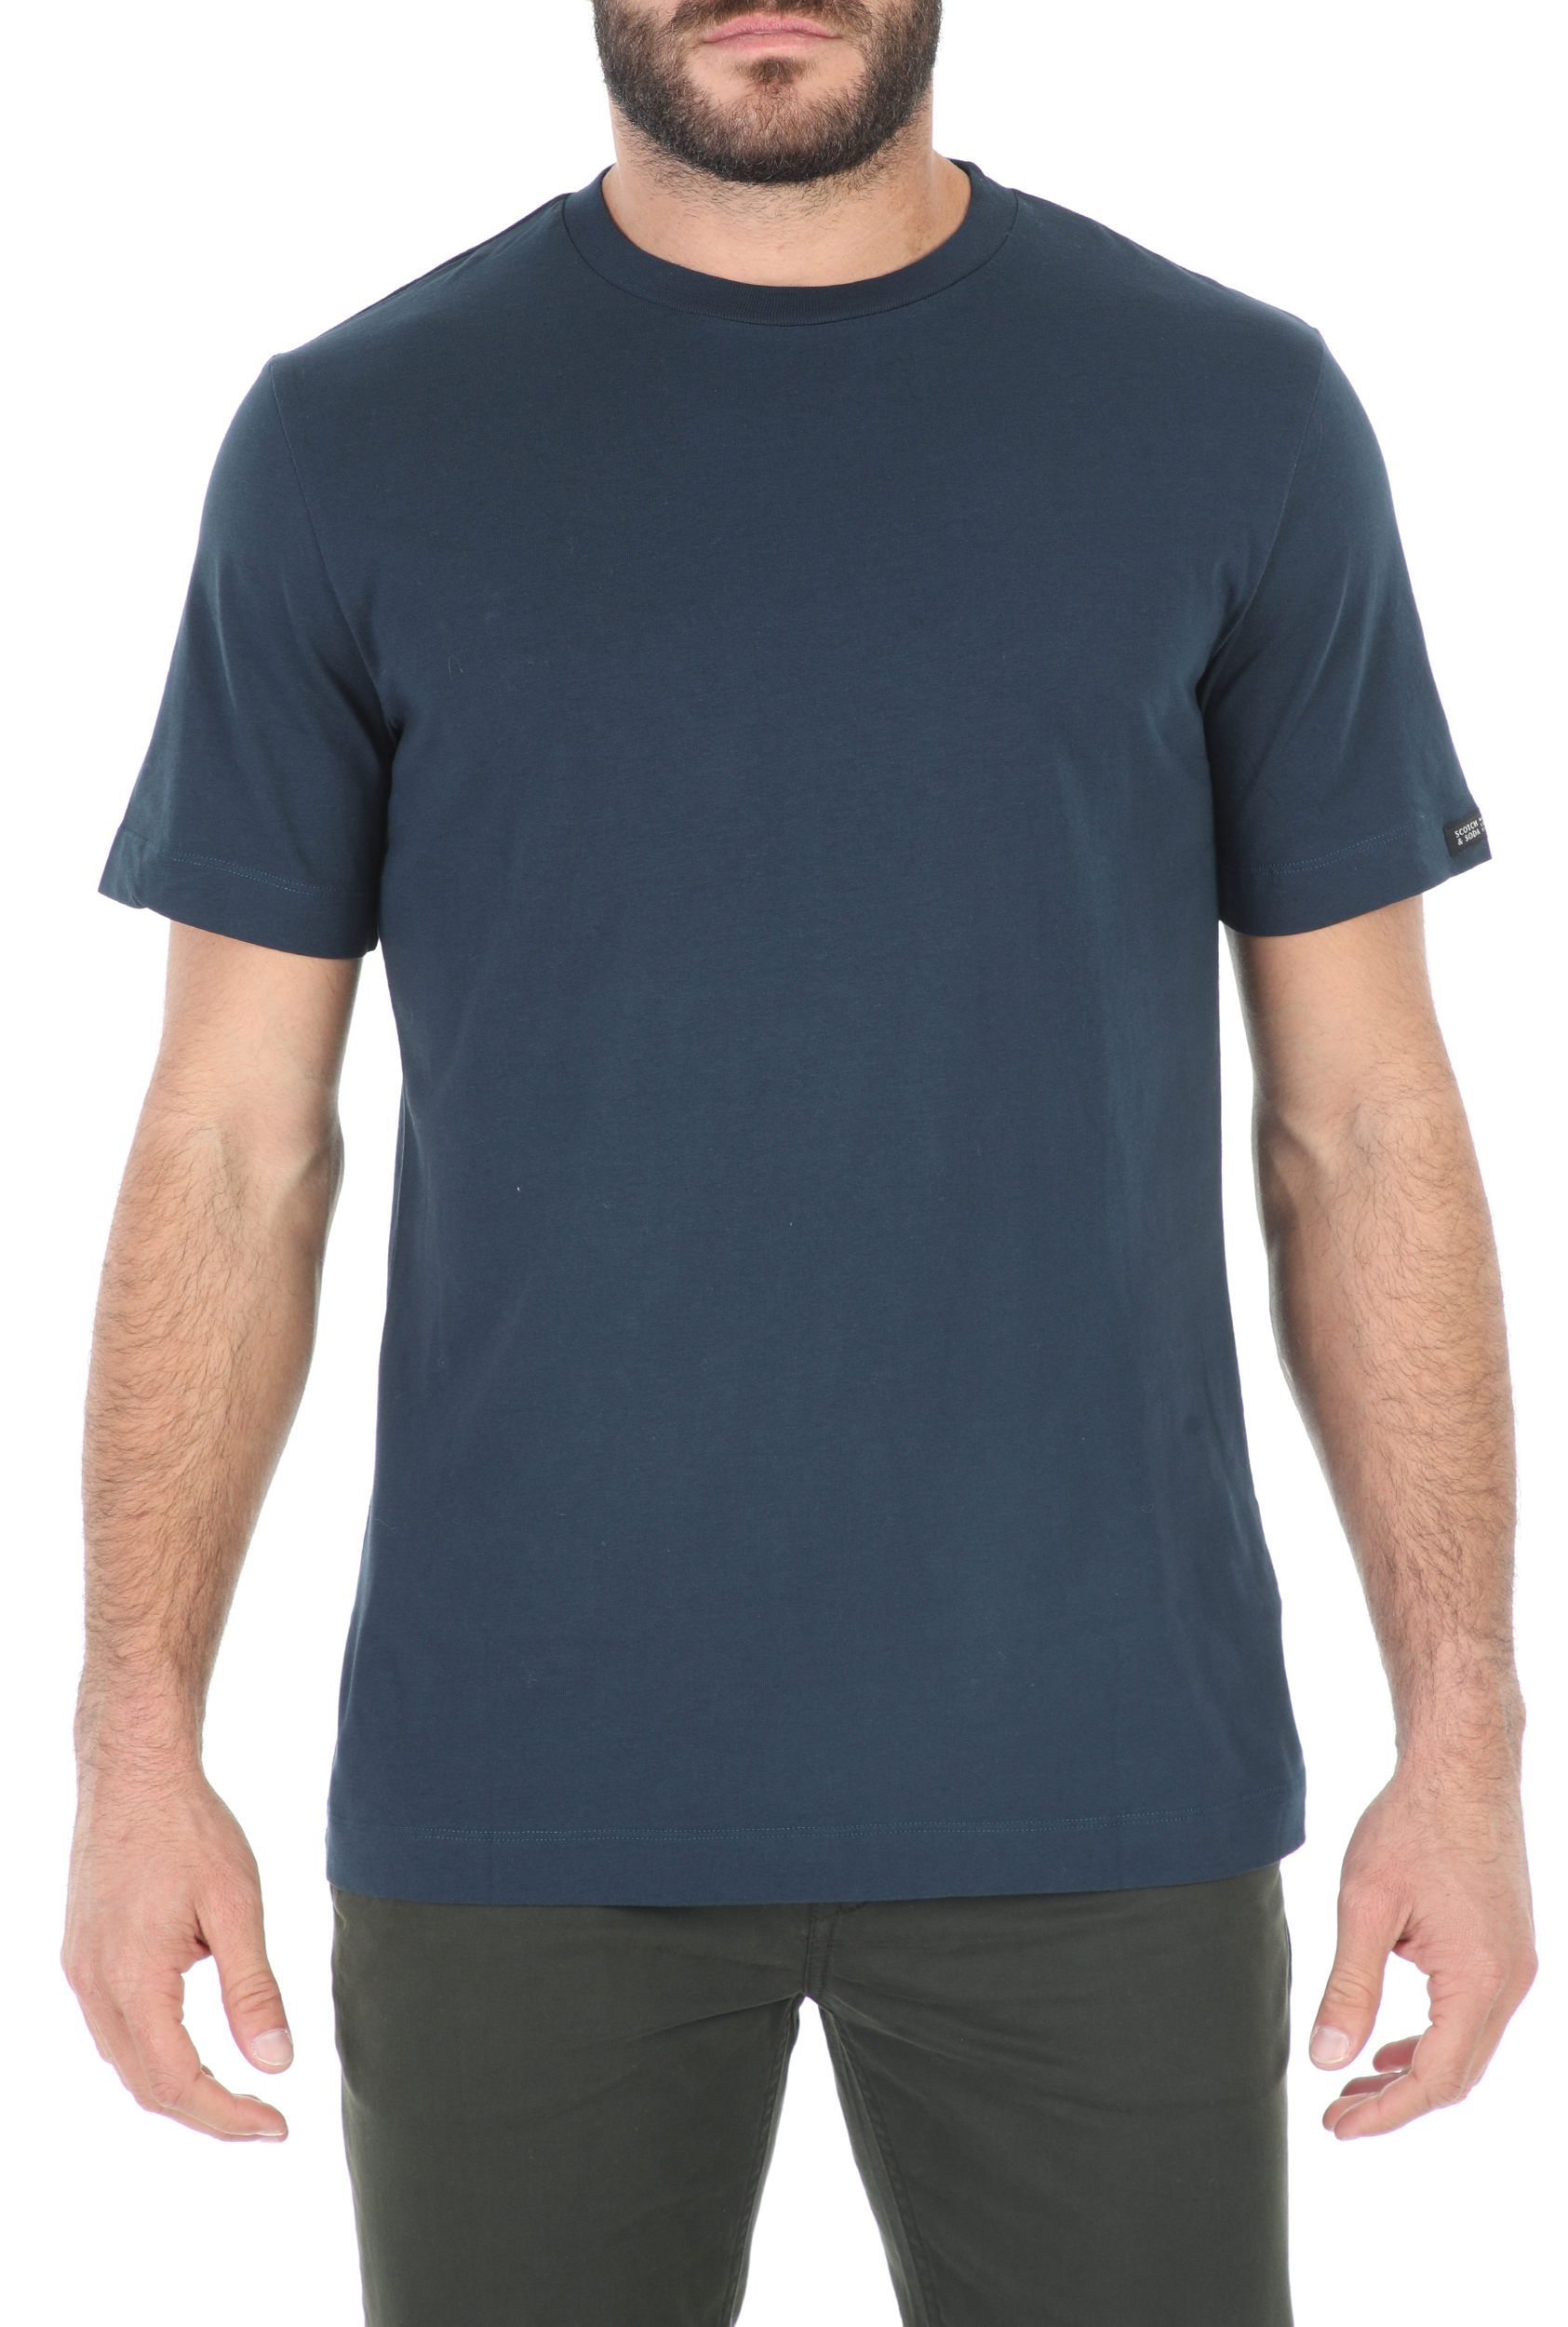 SCOTCH & SODA - Ανδρικό t-shirt SCOTCH & SODA Classic organic cotton μπλε Ανδρικά/Ρούχα/Μπλούζες/Κοντομάνικες